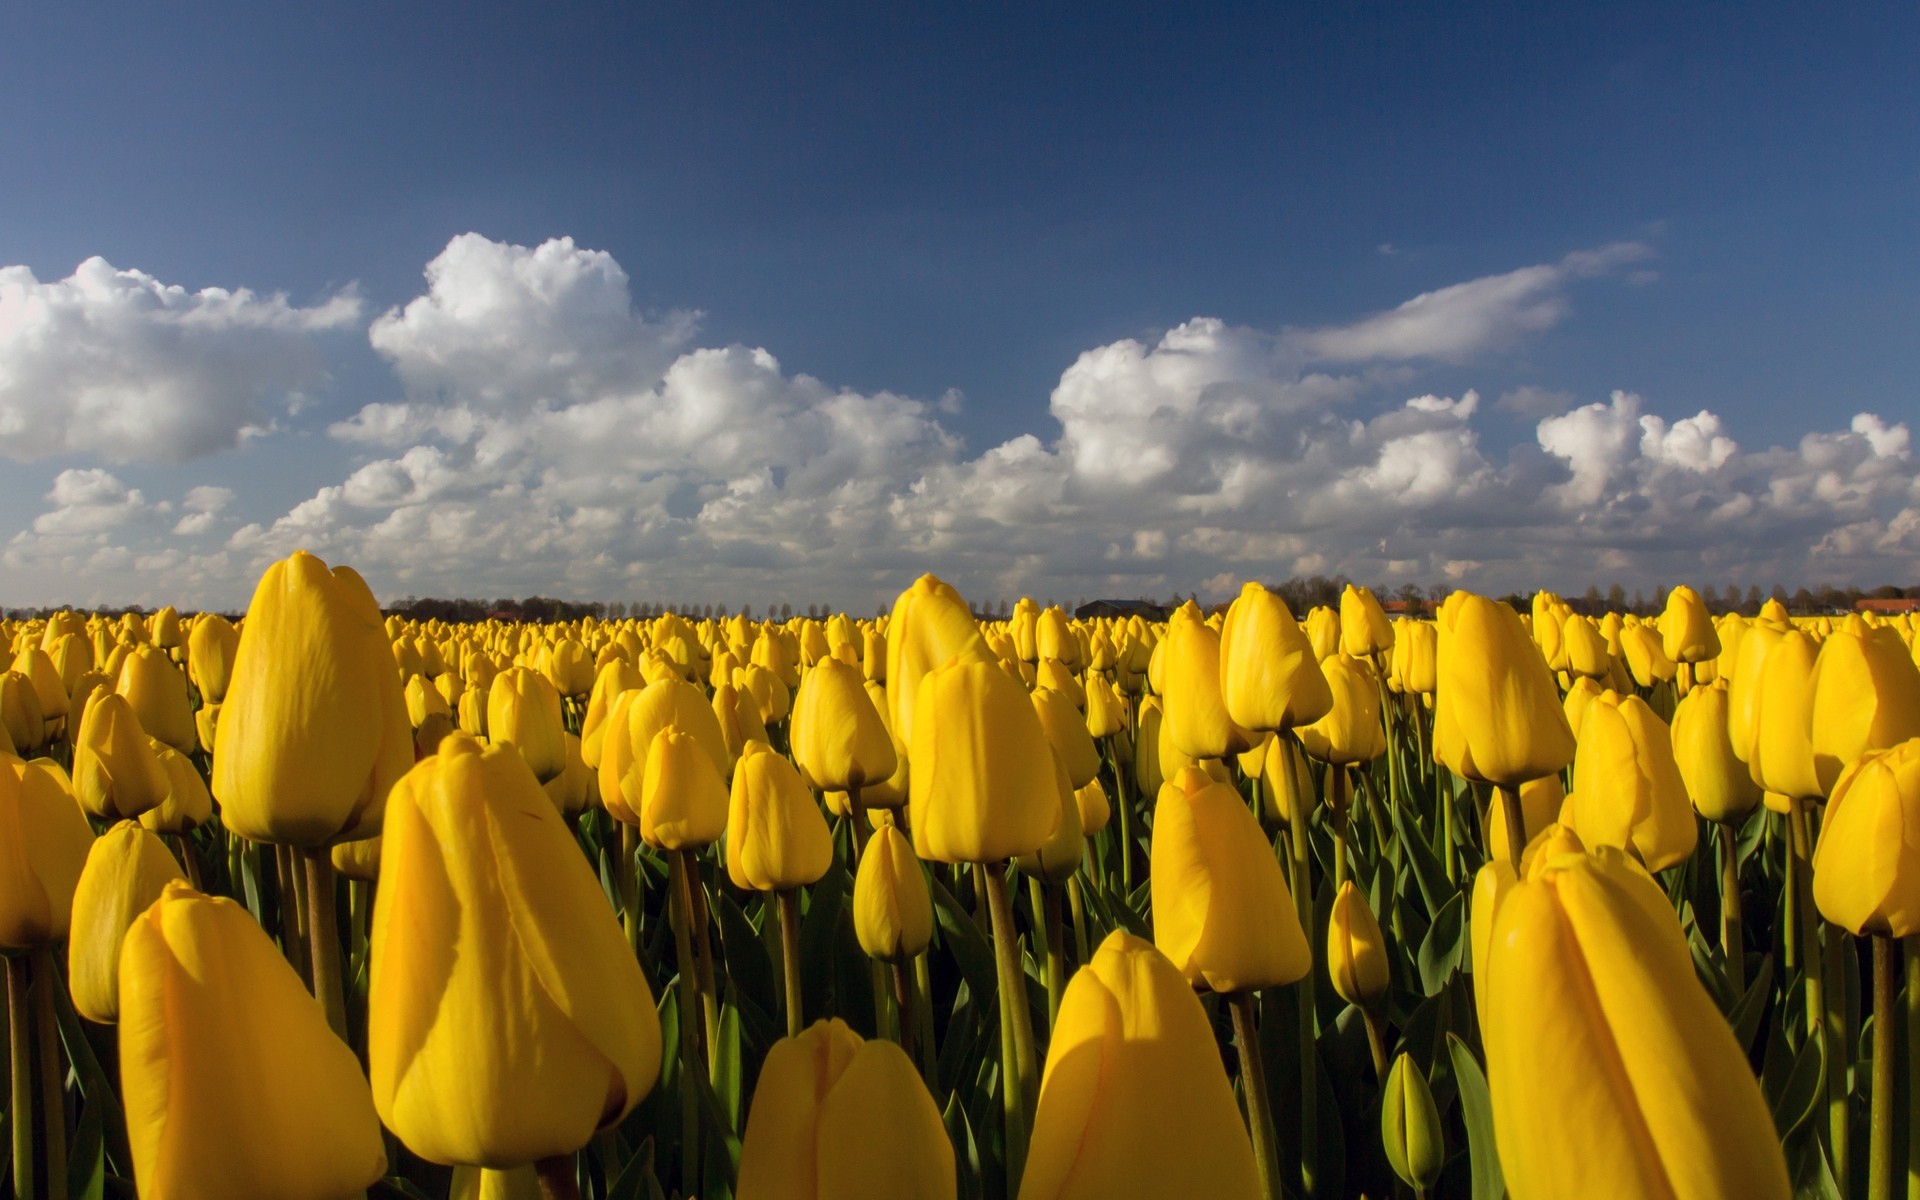 flowers nature outdoors bright sky landscape summer fair weather sun flora flower field tulips yellow tulips